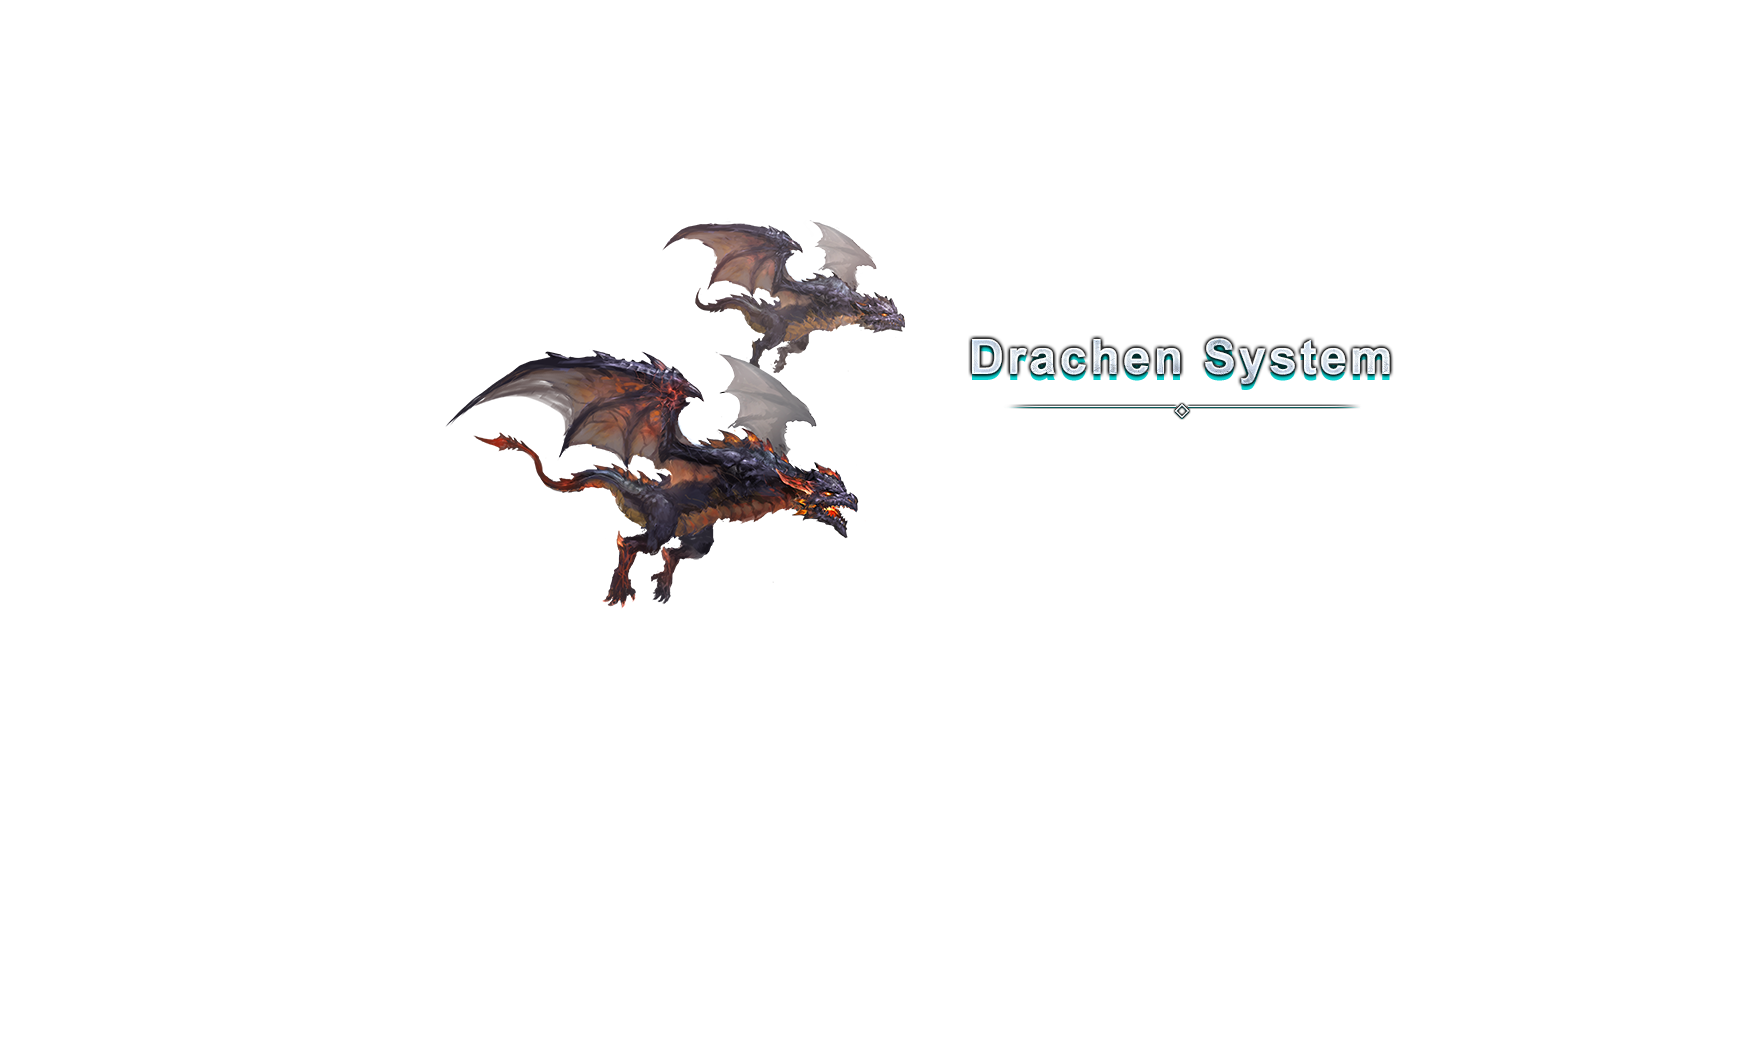 Drachen System